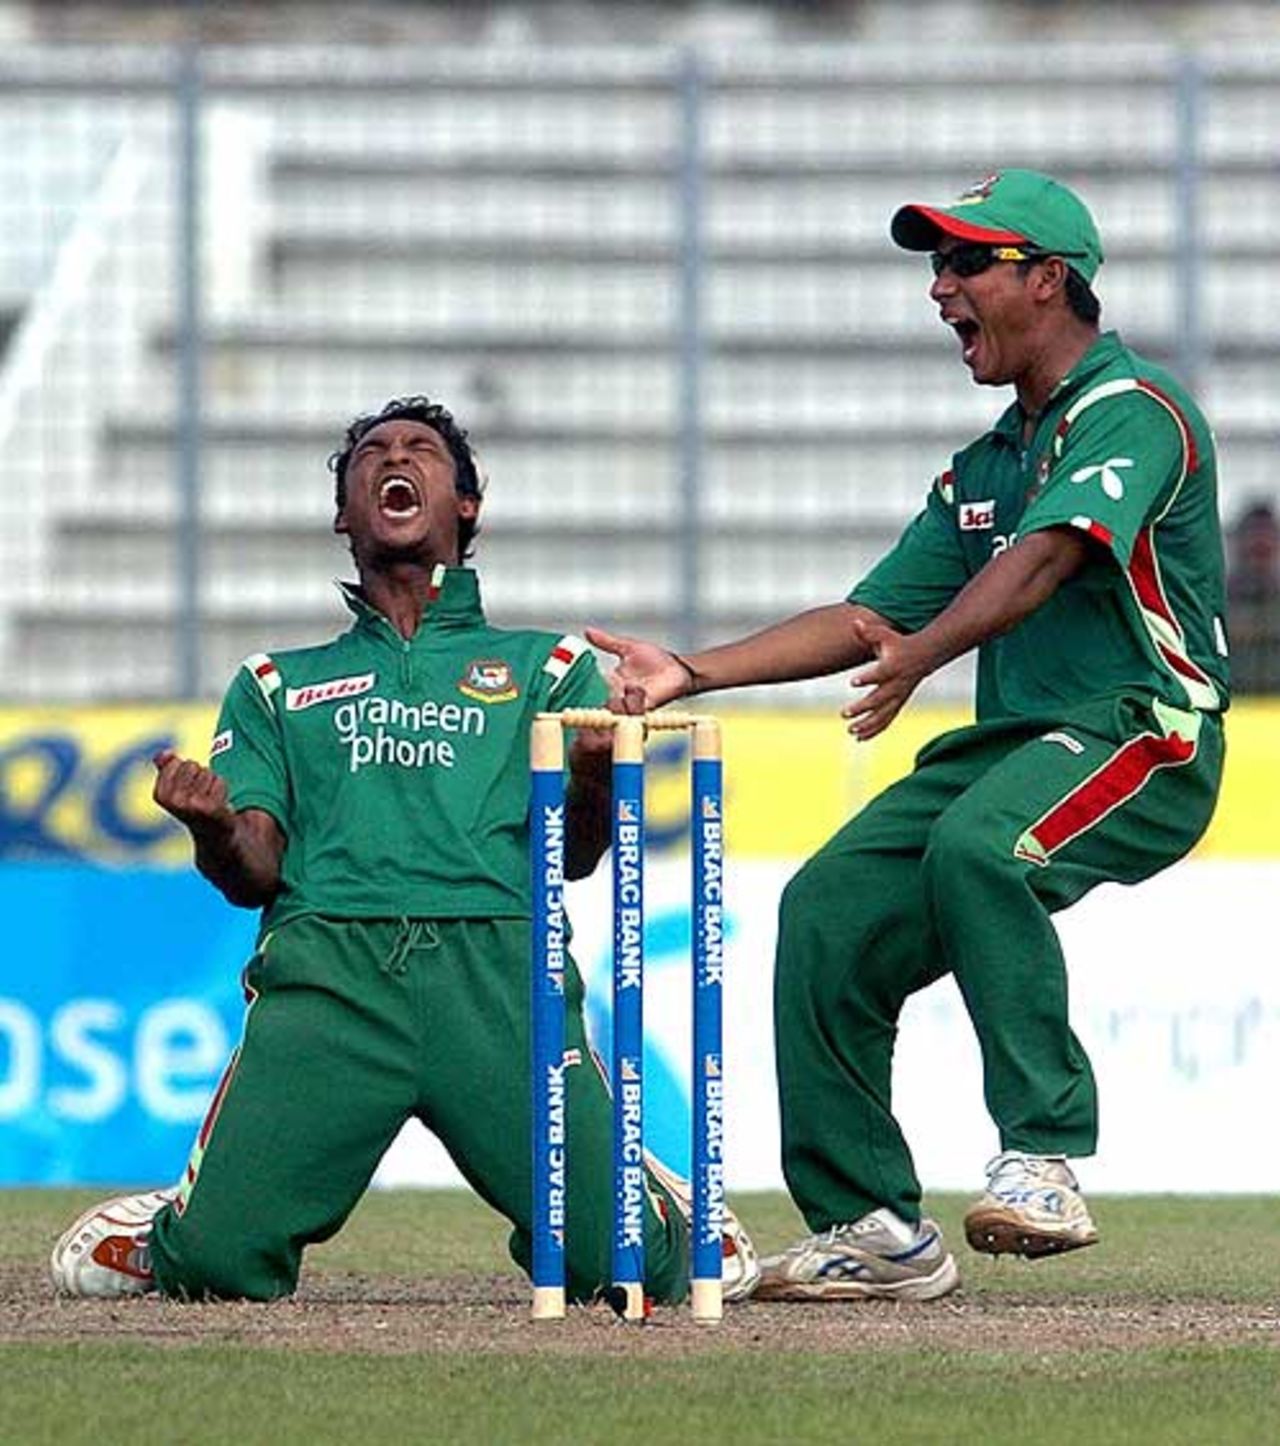 Naeem Islam and Mohammad Ashraful celebrate Daniel Vettori's wicket, Bangladesh v New Zealand, 2nd ODI, Mirpur, October 11, 2008